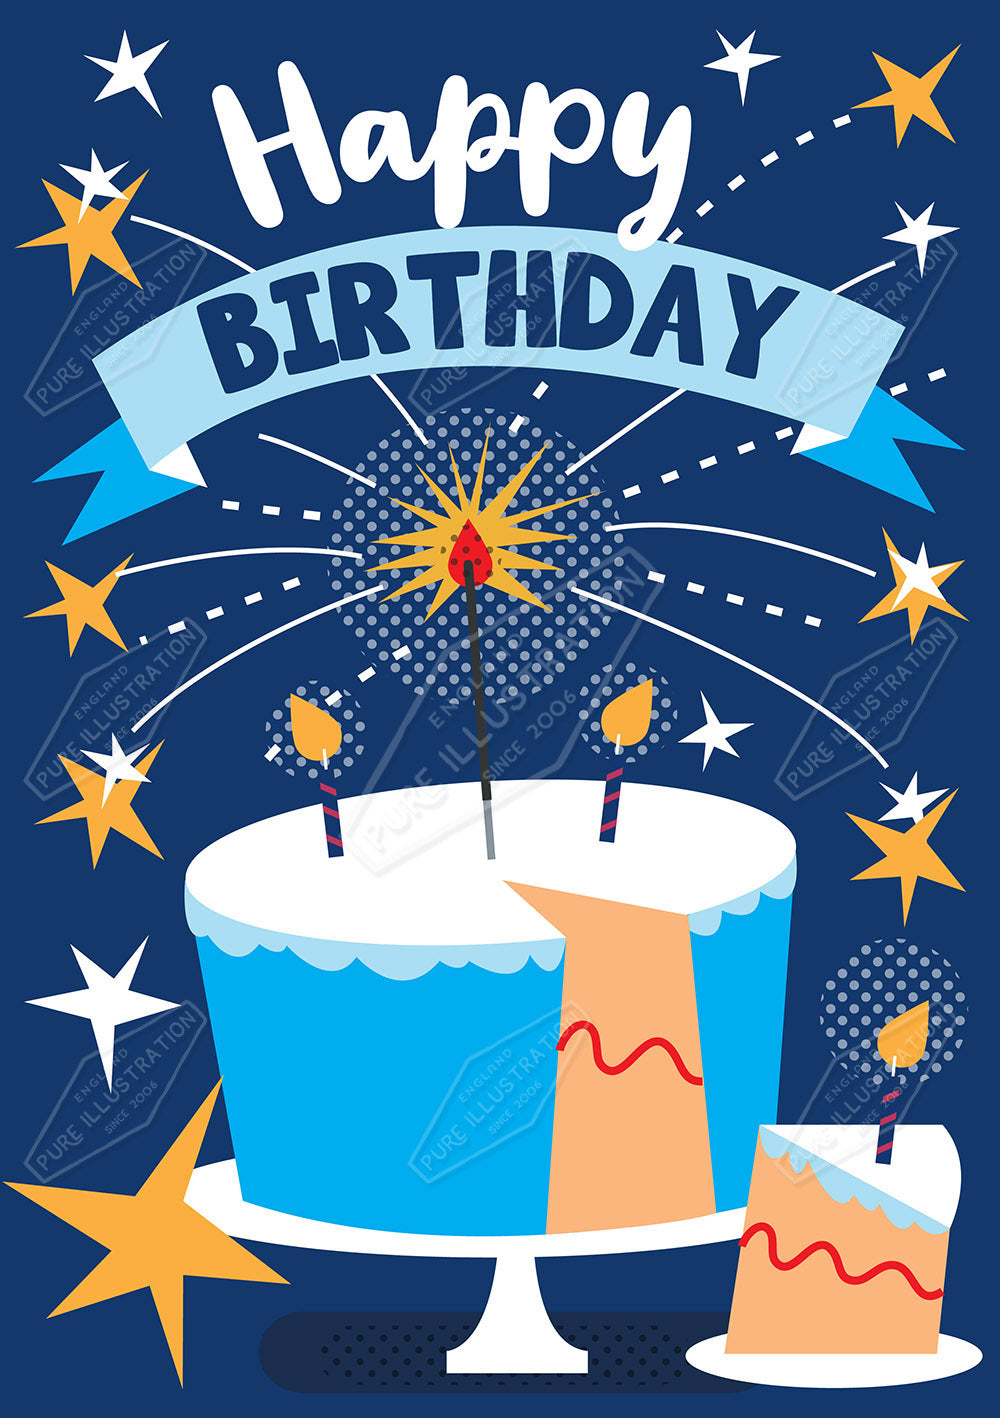 00032880RSW - Luke Swinney is represented by Pure Art Licensing Agency - Birthday Greeting Card Design